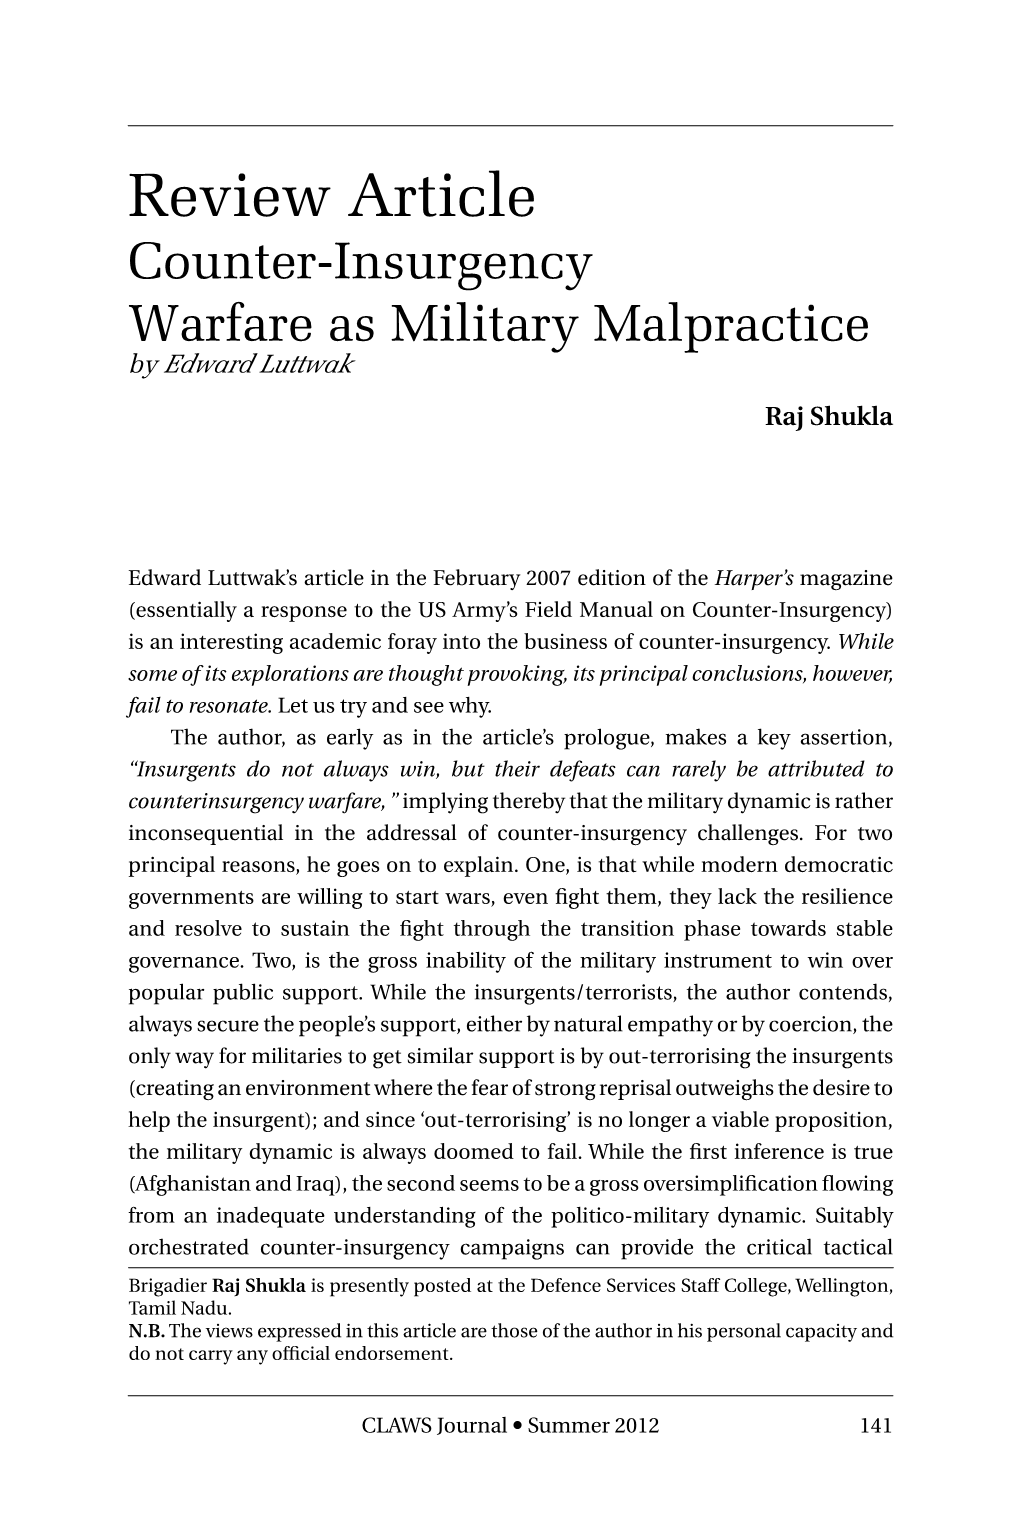 Review Article Counter-Insurgency Warfare As Military Malpractice by Edward Luttwak